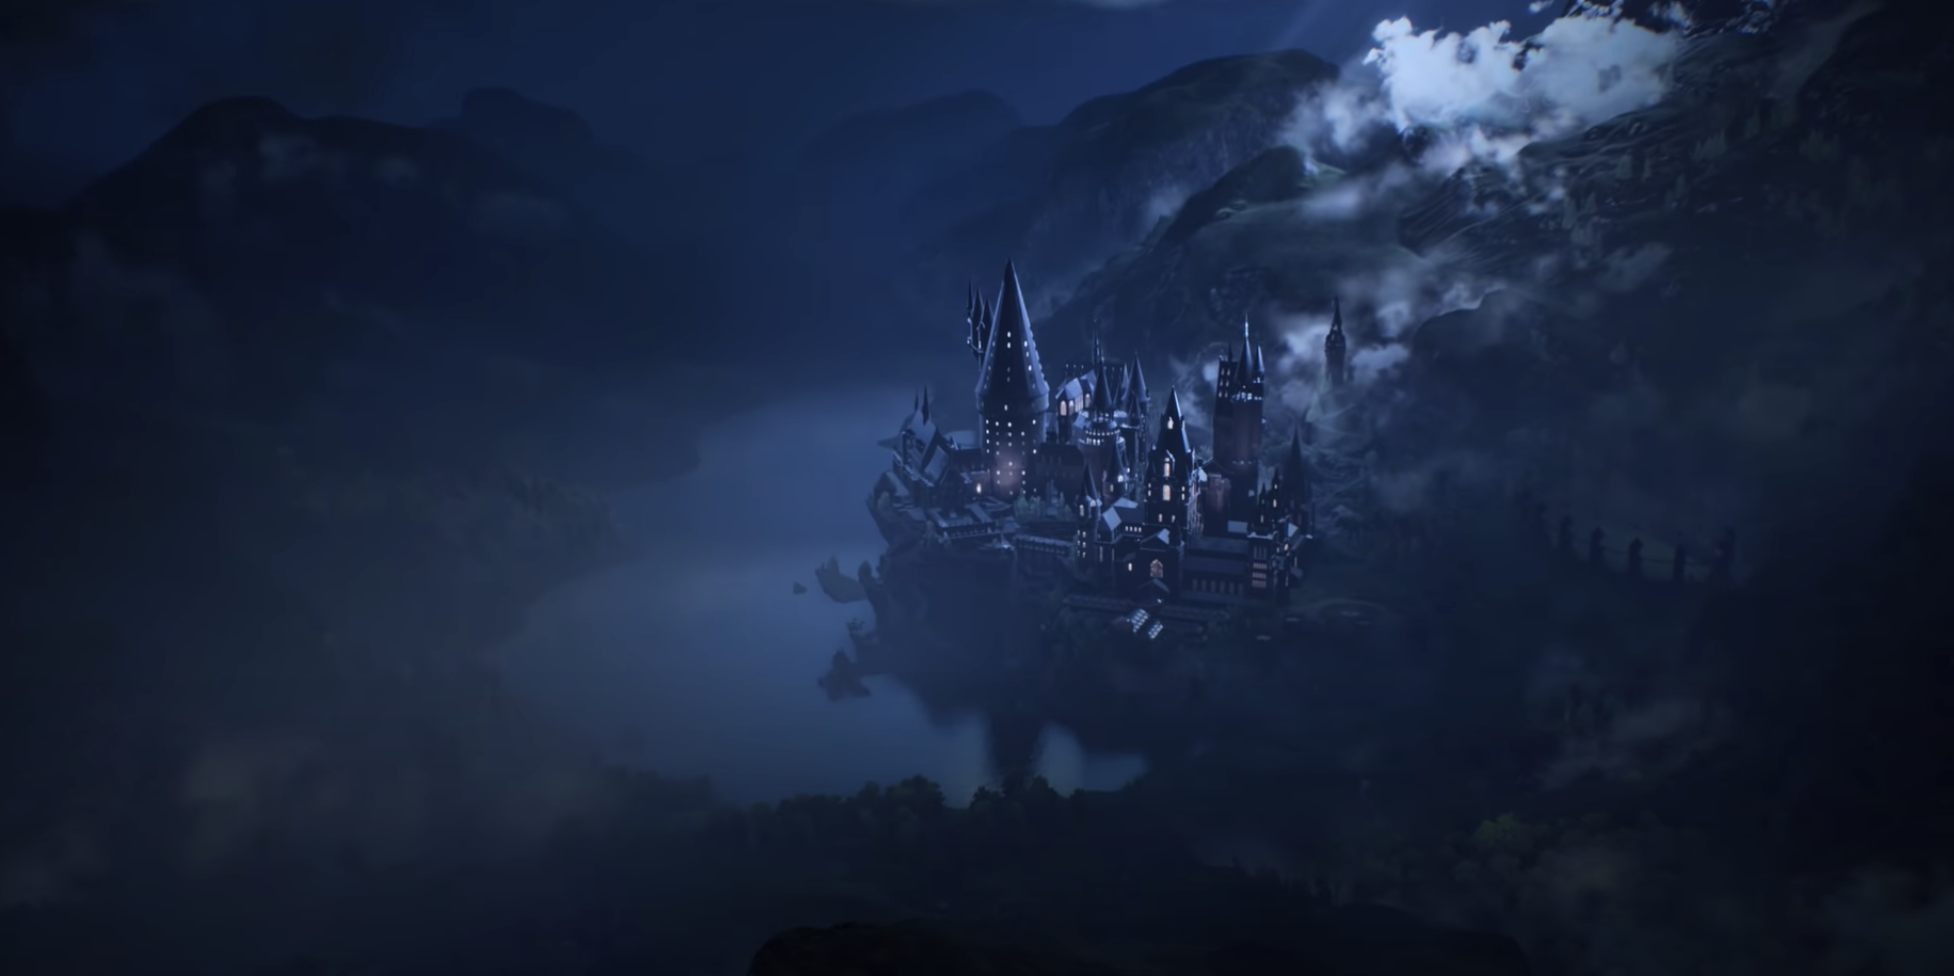 New Hogwarts Legacy trailer showcases Dark Arts Deluxe Edition pre-order  bonus - Dexerto